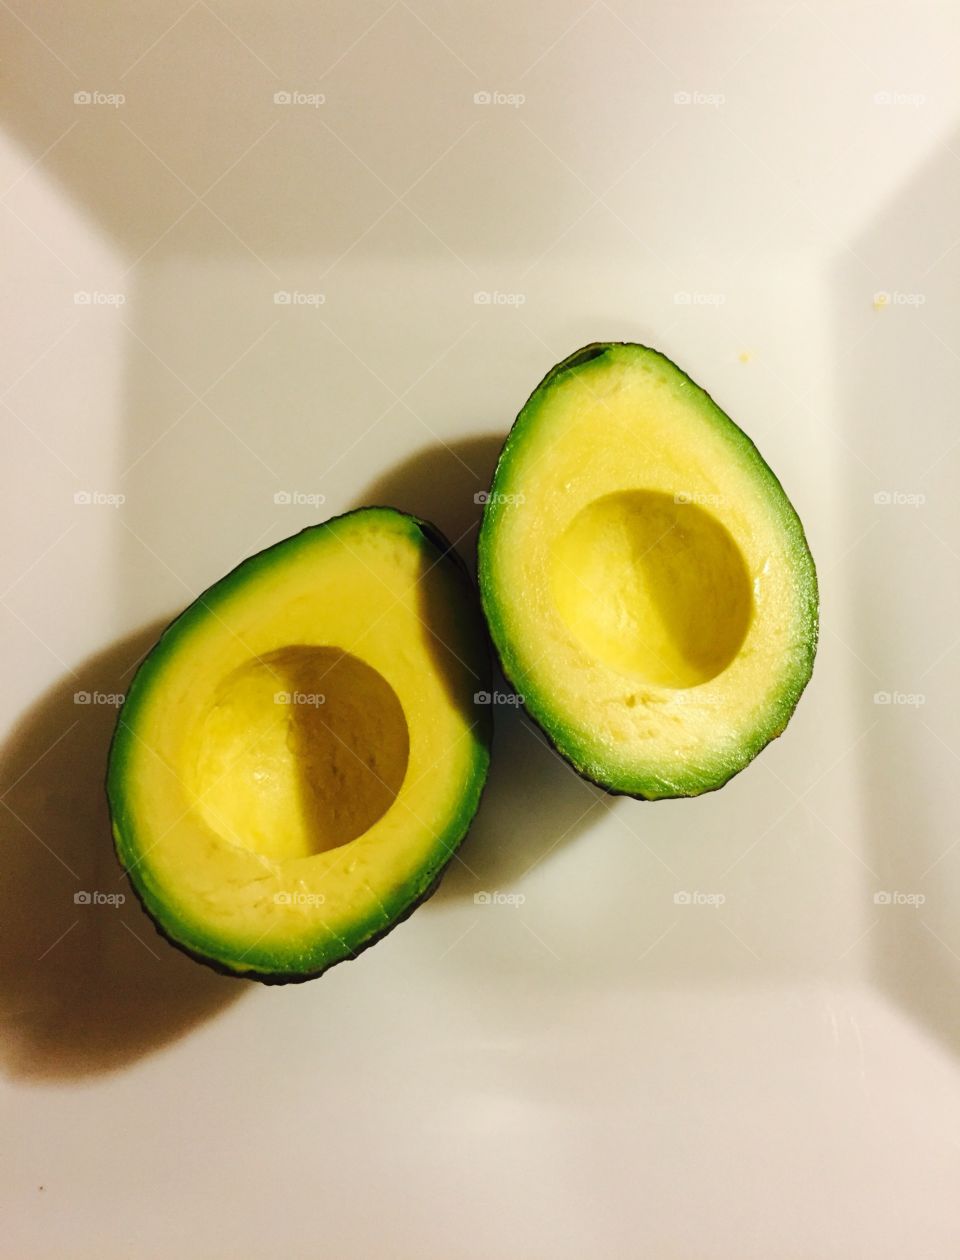 Perfectly halved avocado